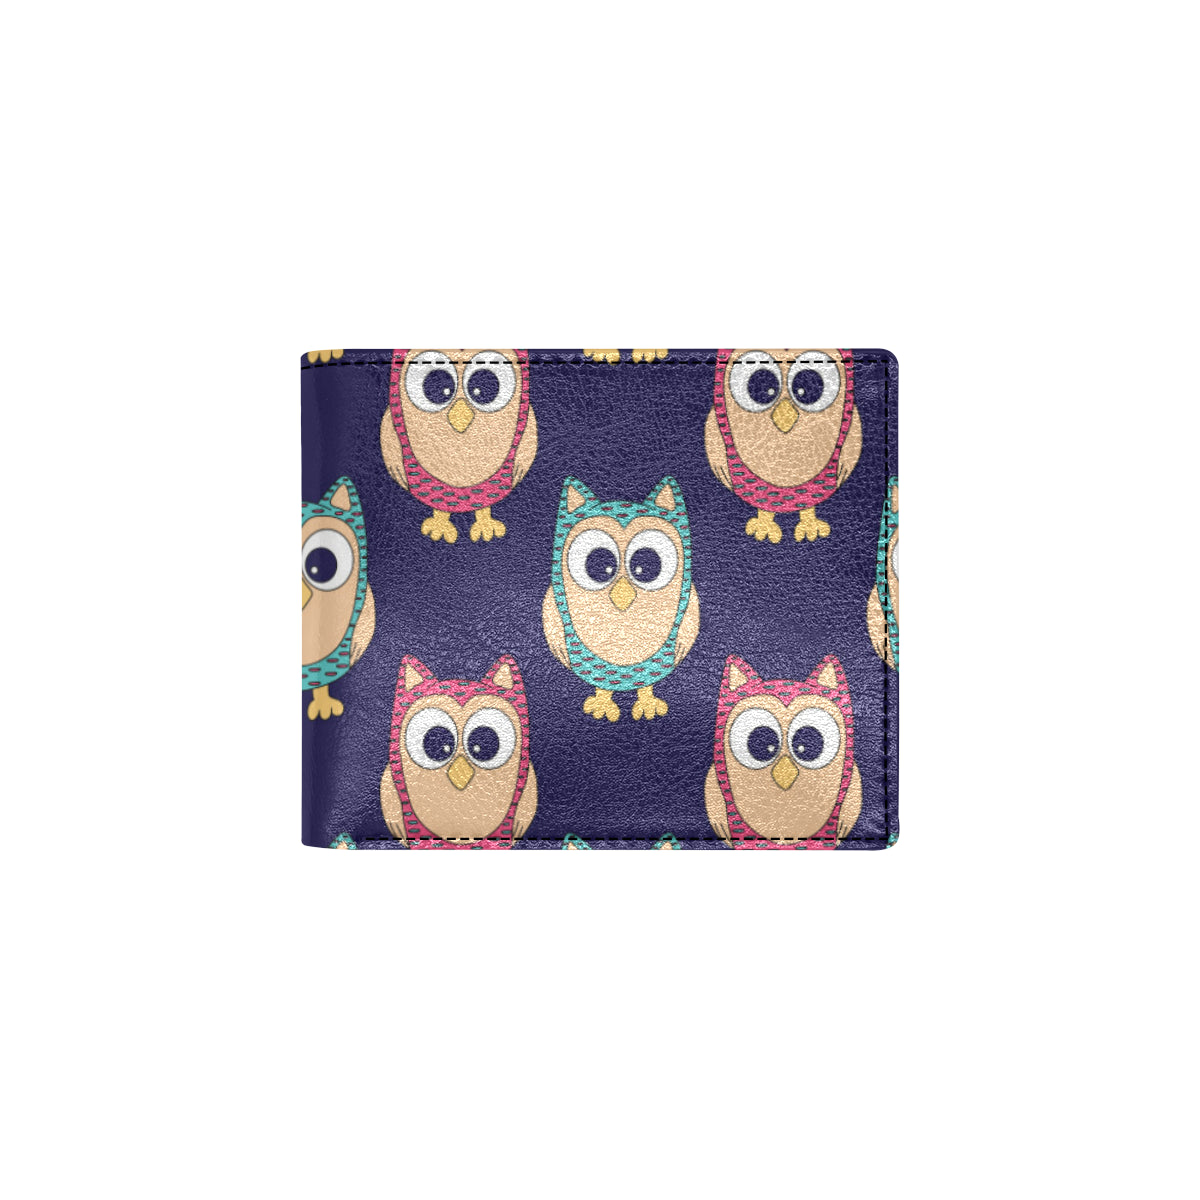 Owl Pattern Print Design A06 Men's ID Card Wallet